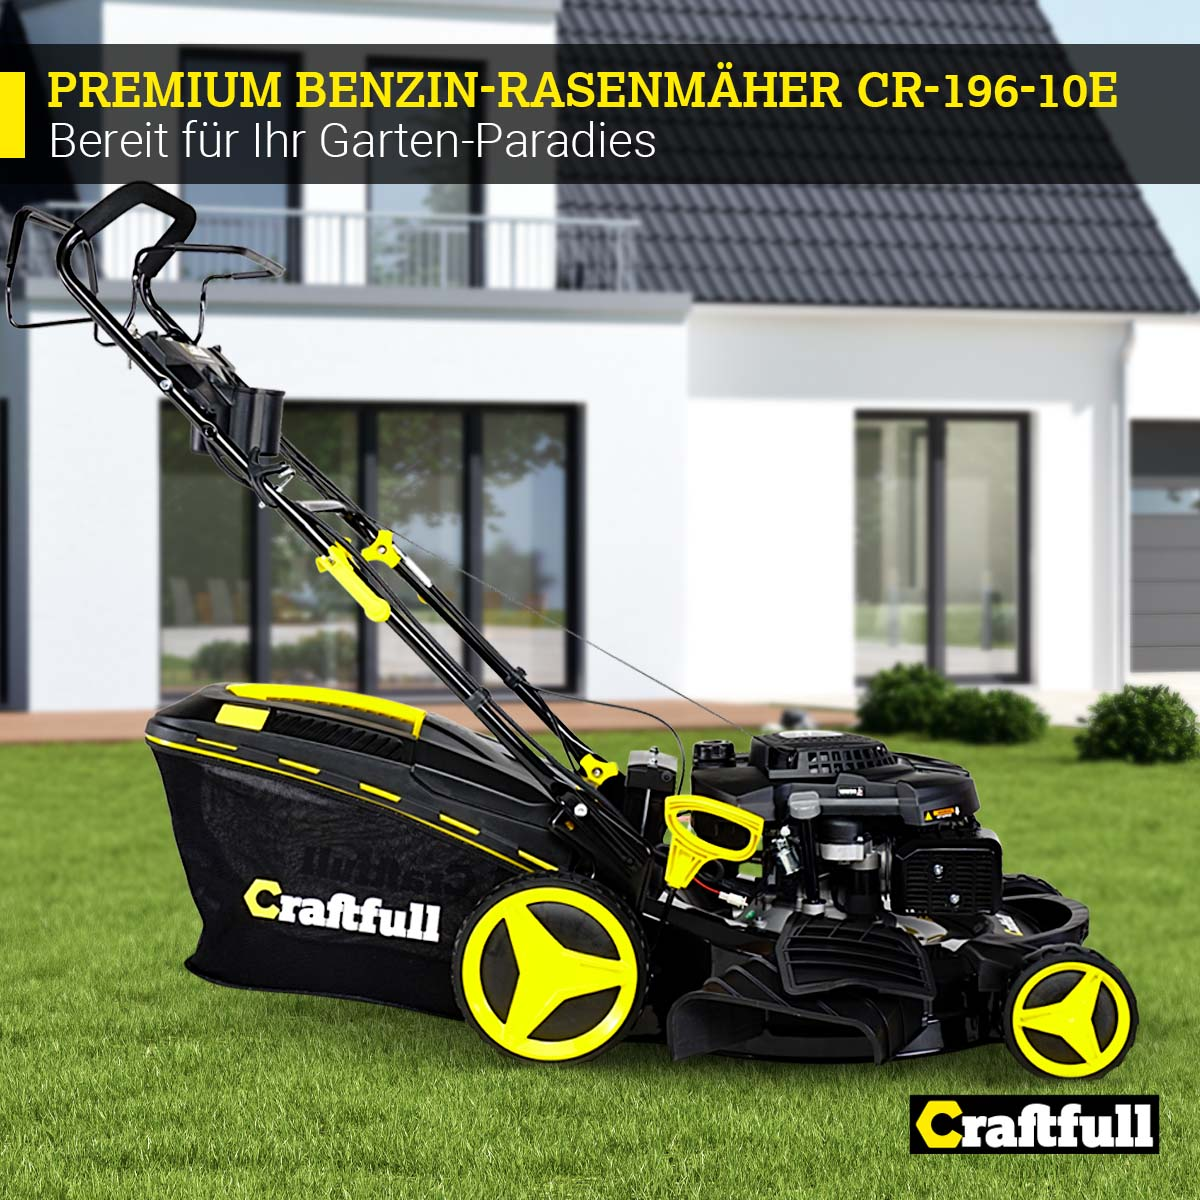 CRAFTFULL Premium 5in1 CR-196-10E, Rasenmäher 25-75 Verstellbare (Schnittbreite: 62 530 mit mm, l mm, Fangkorb-Volumen) Schnitthöhe